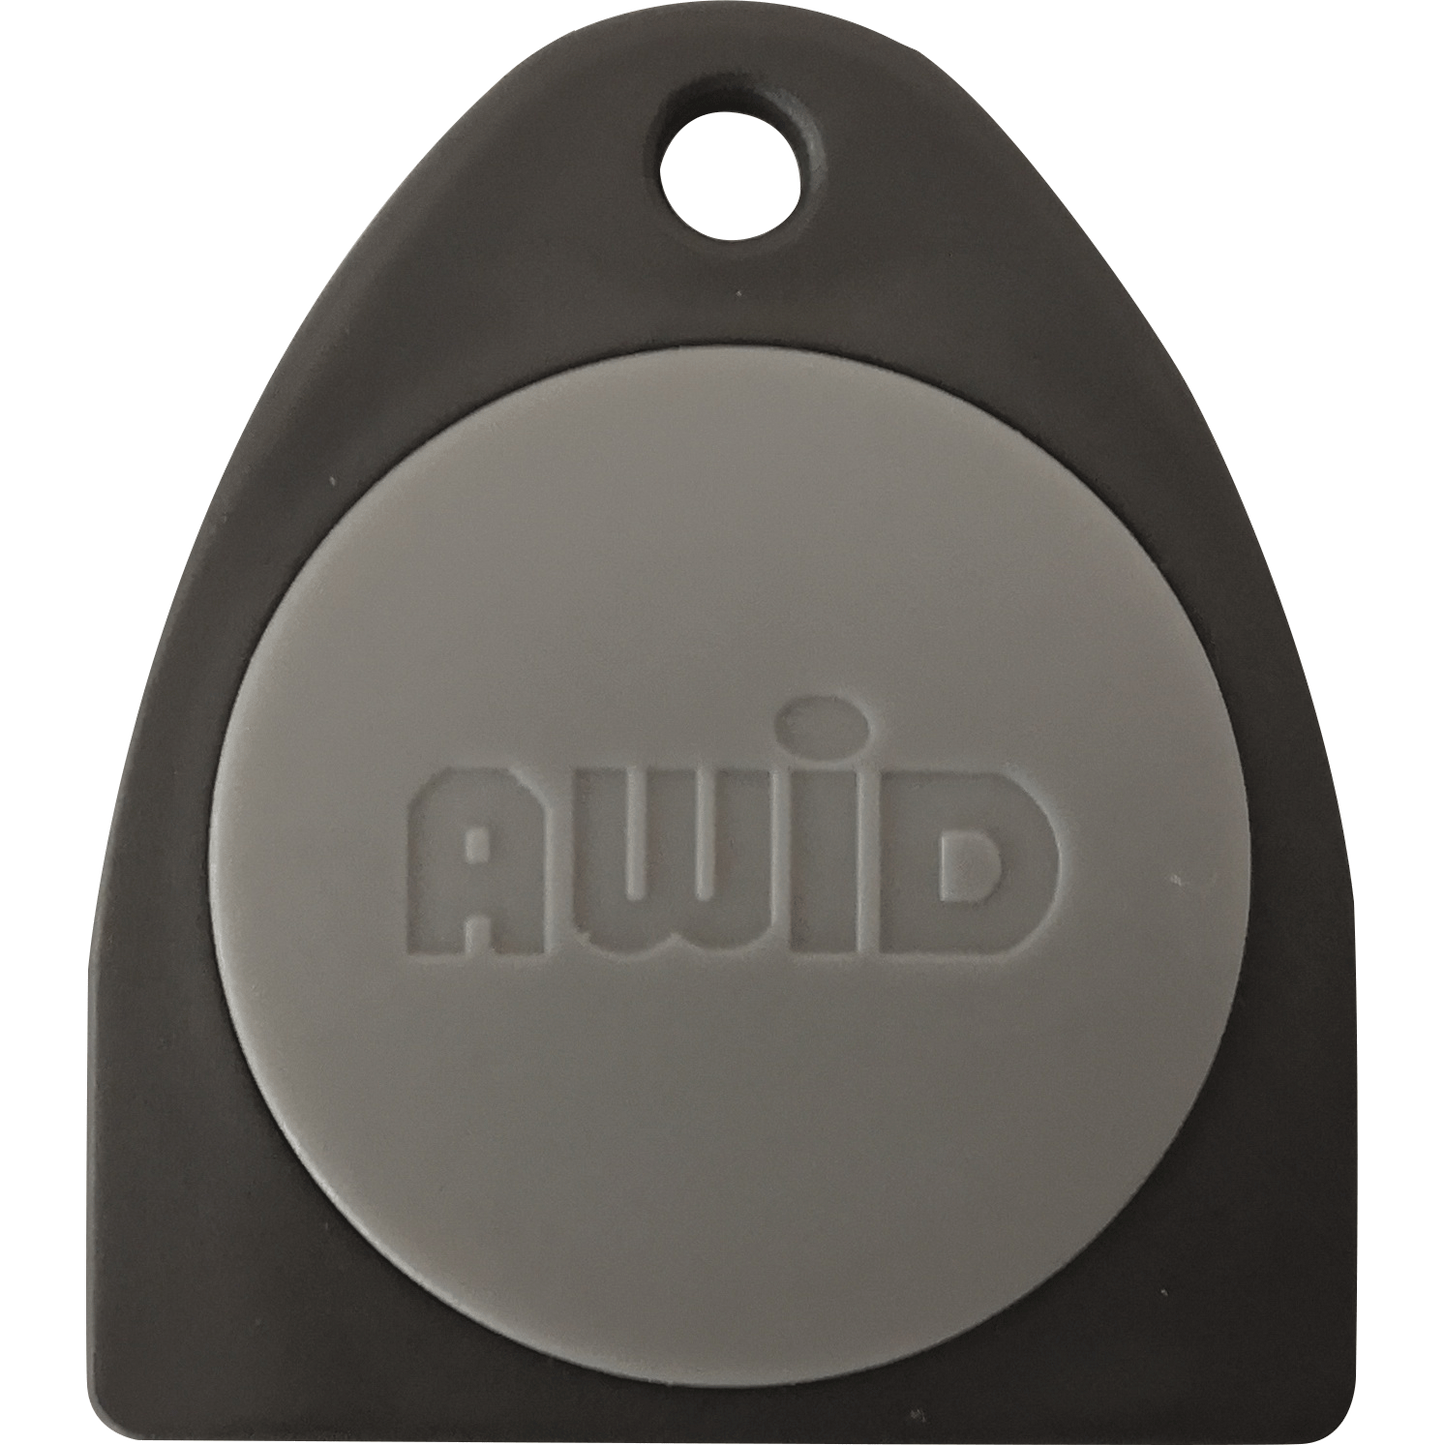 AWID 兼容遥控钥匙